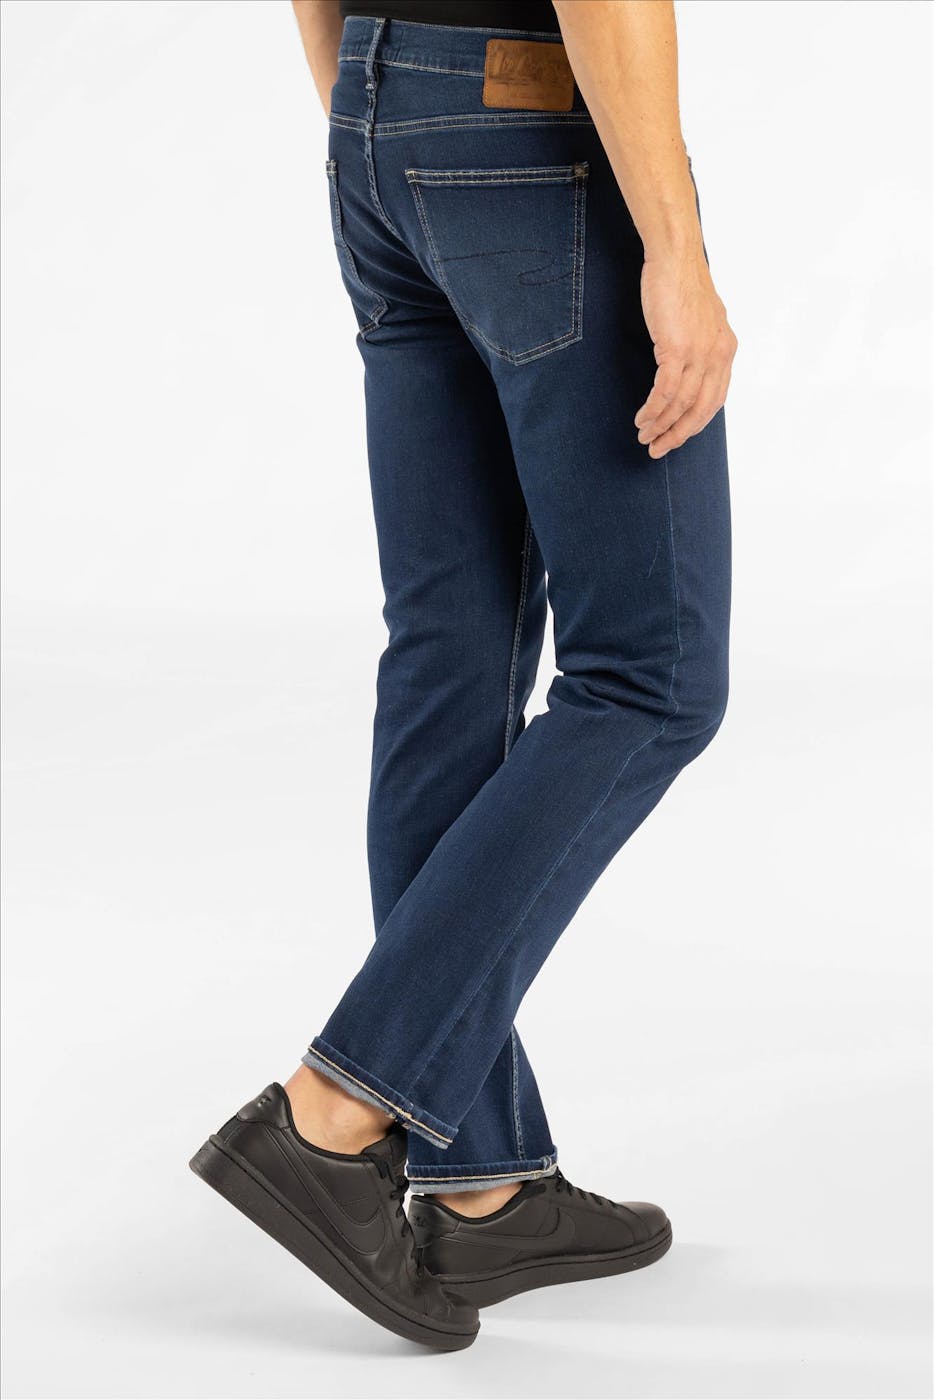 Lee Cooper - Intens donkerblauwe LC112ZP slim jeans